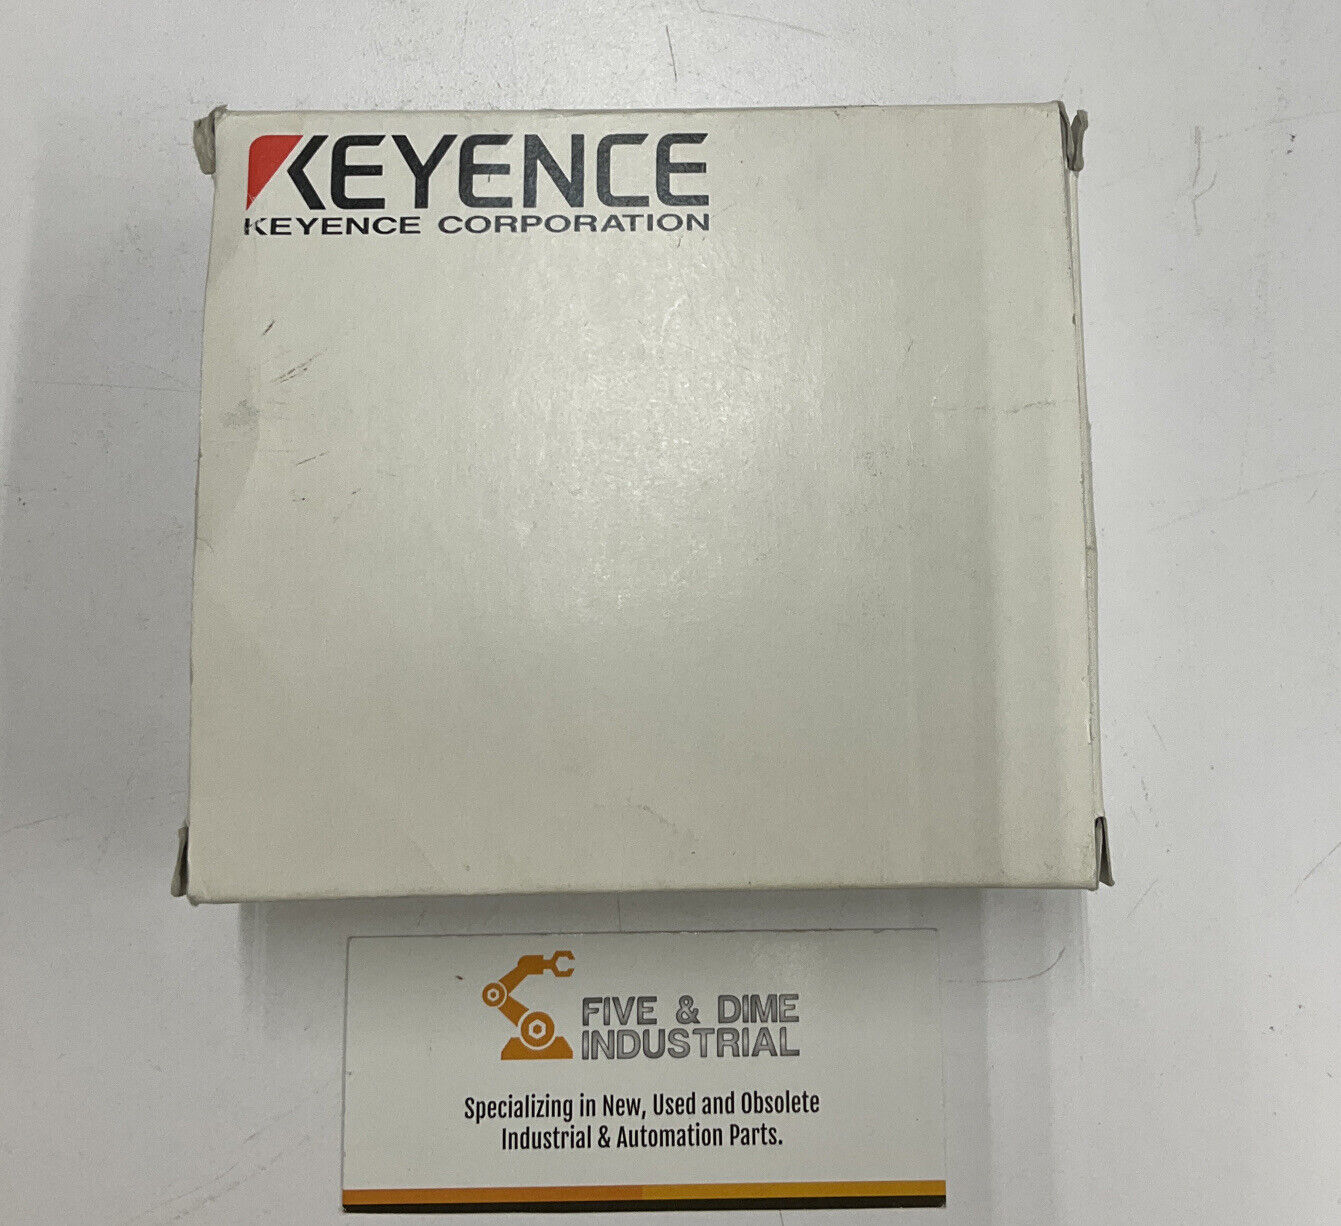 Keyence PG-610 Optical Fiber Sensor (YE224)